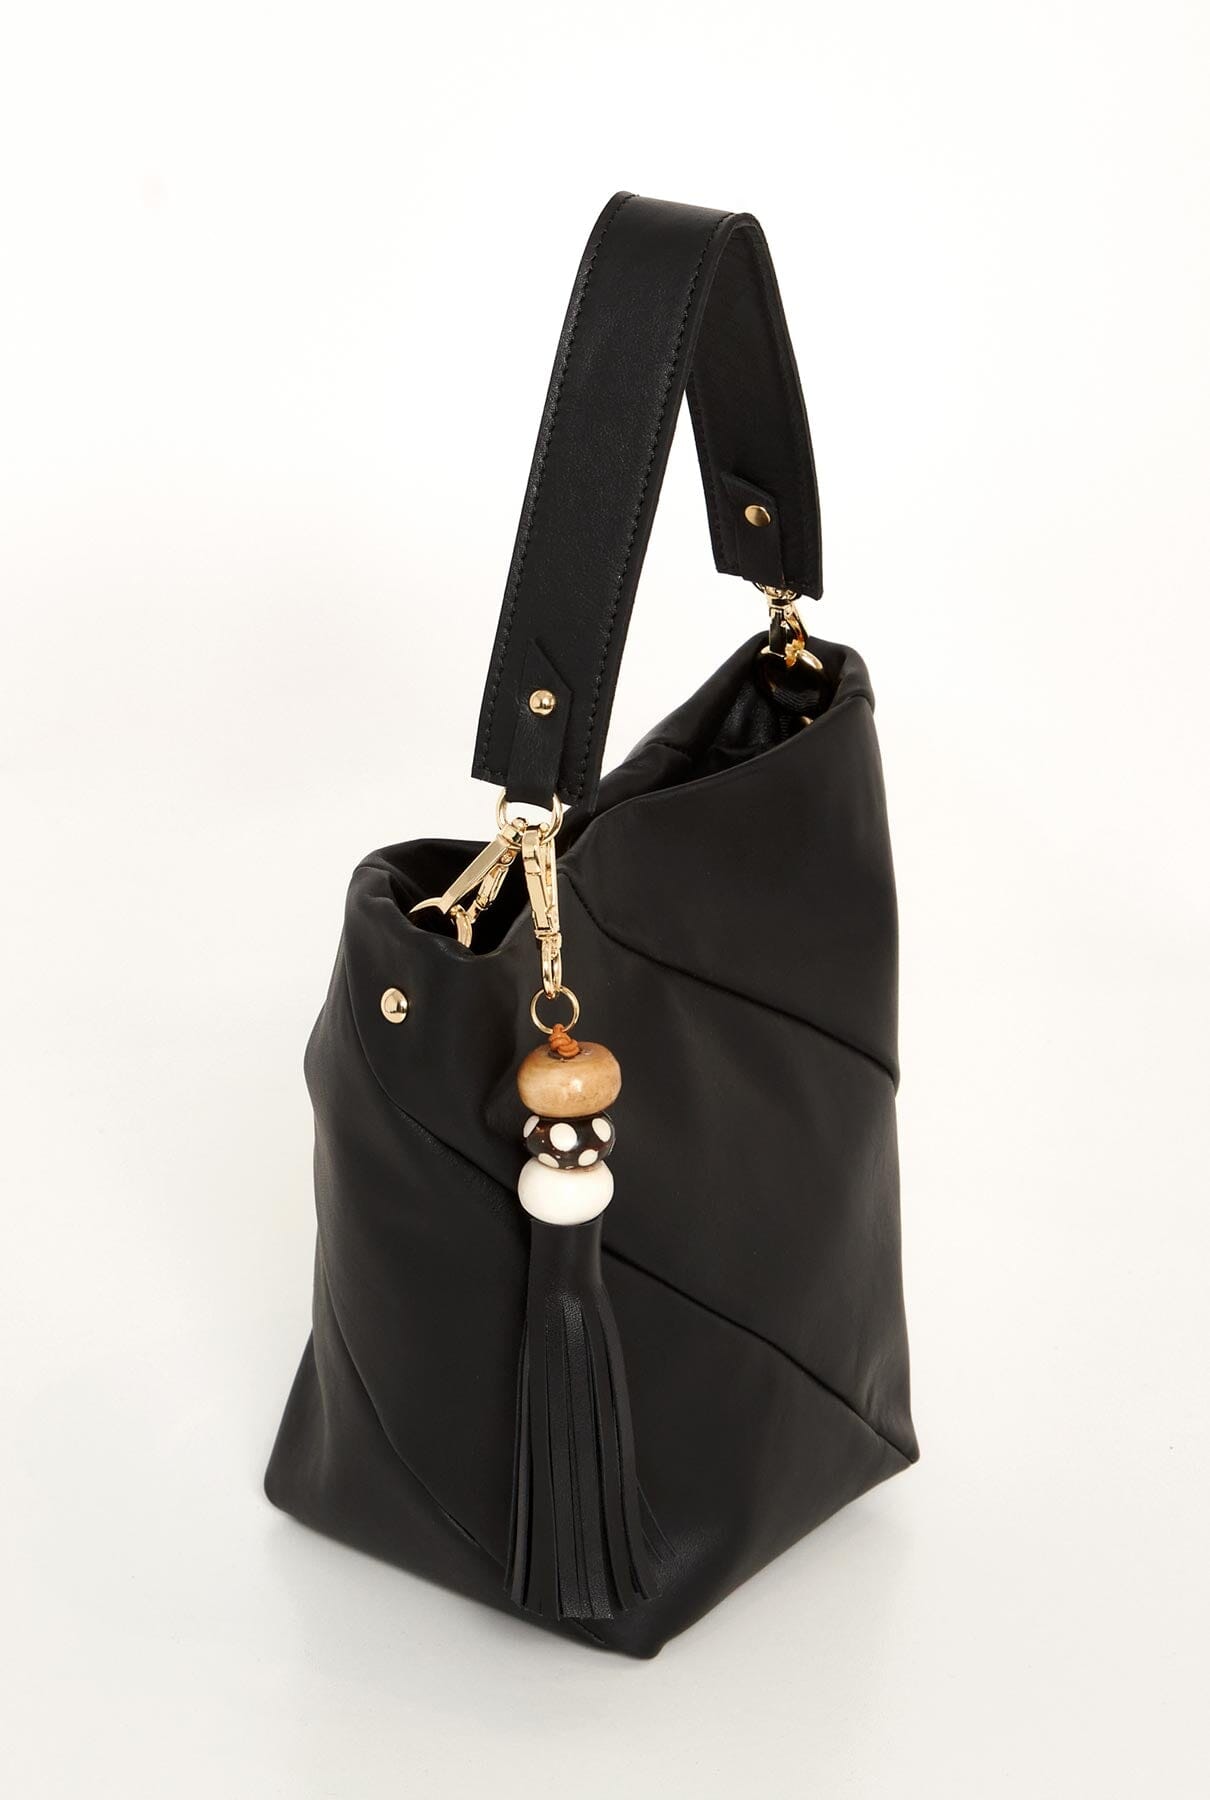 The Mini Lola Bag Negro Hand bags The Bag Lab 